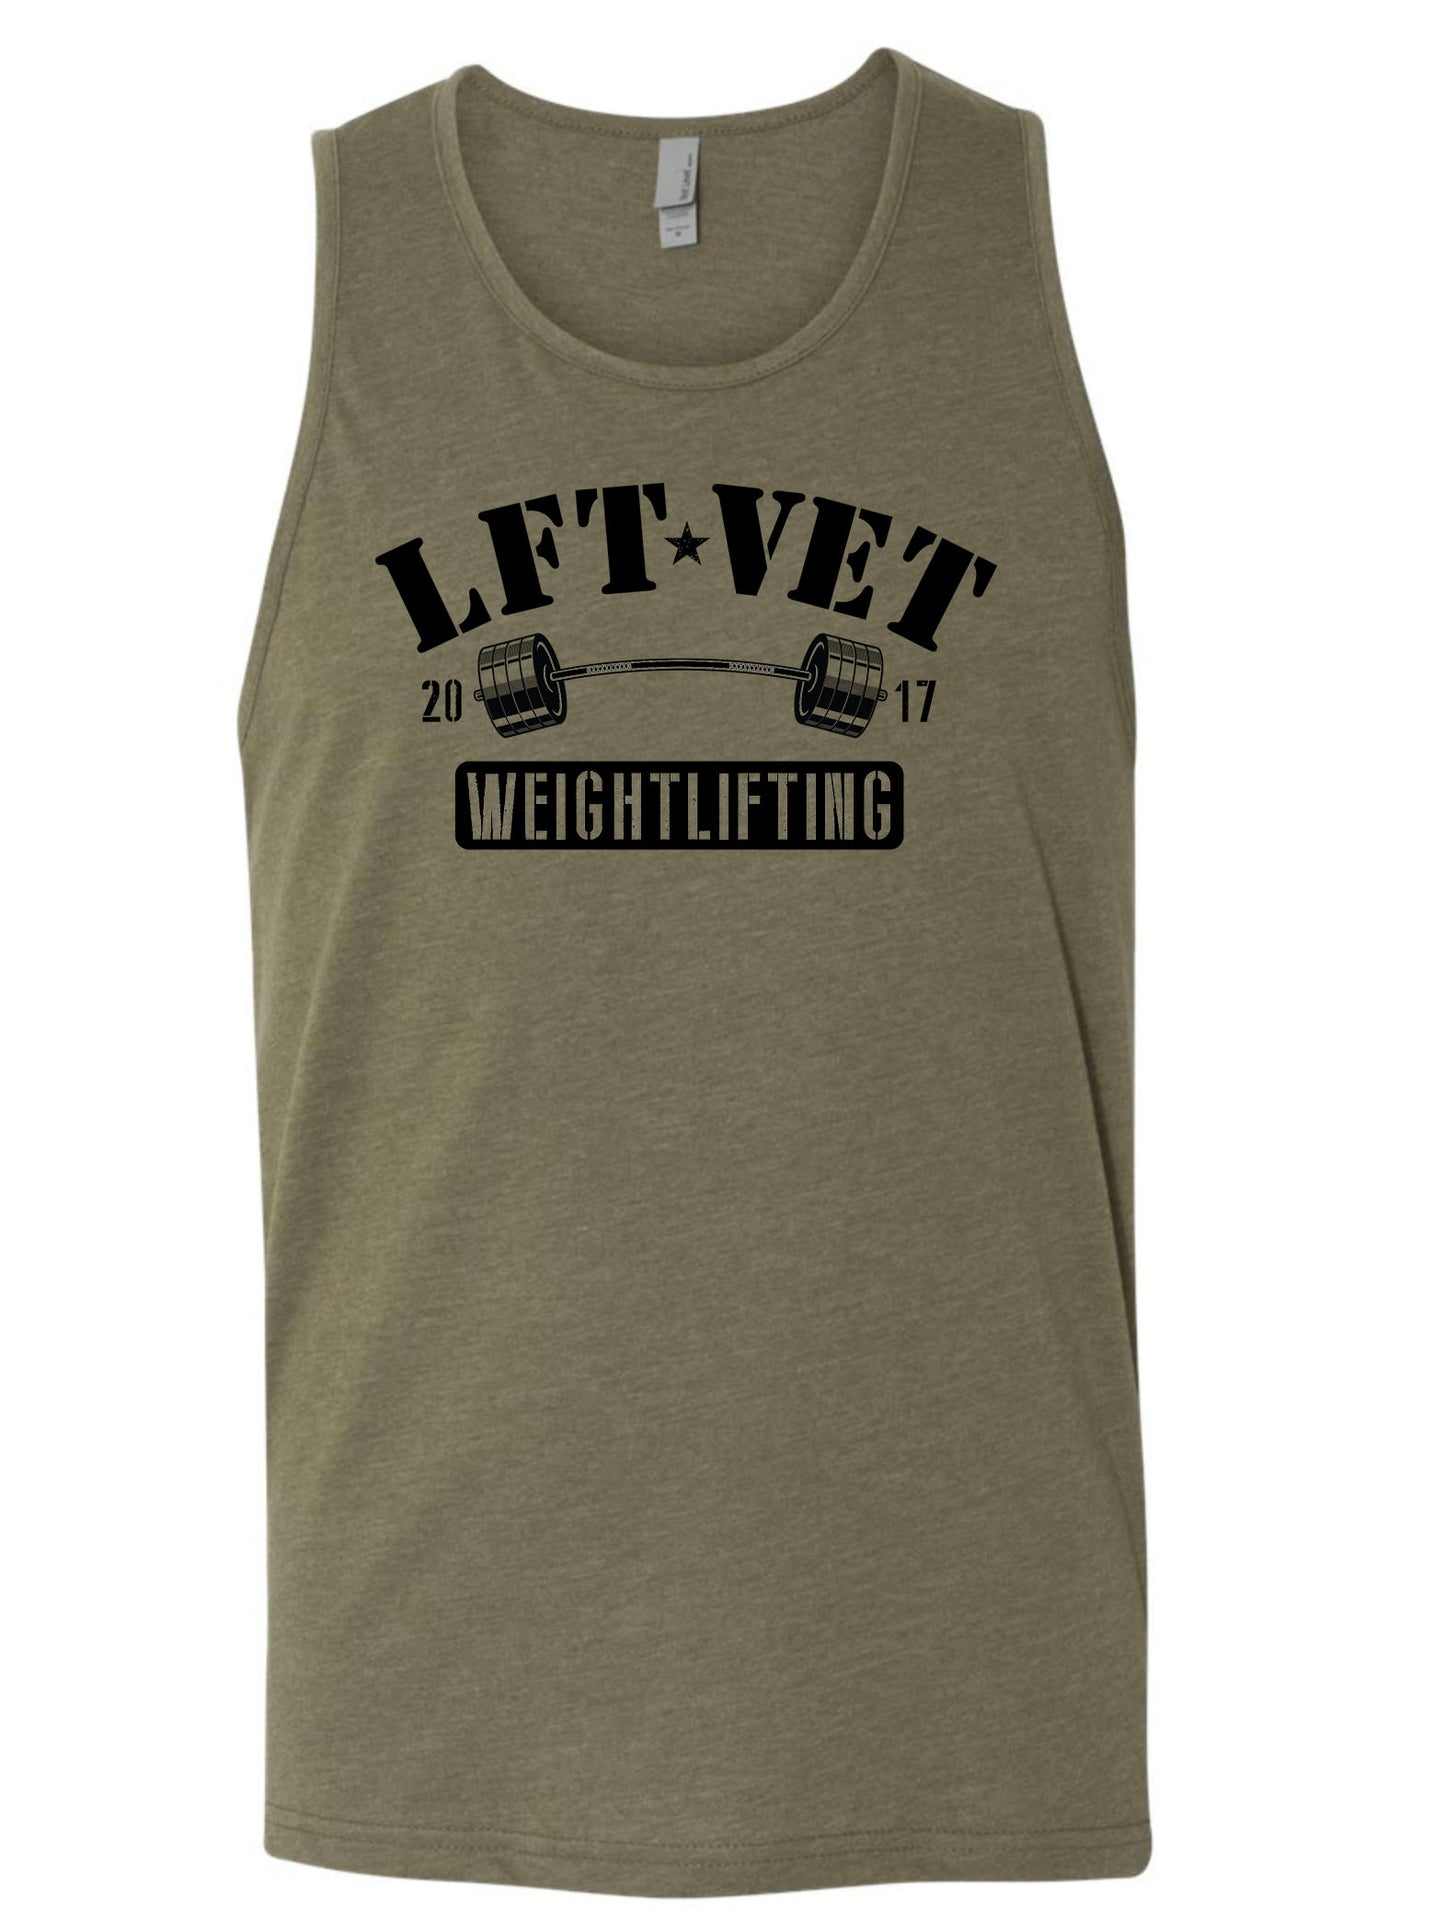 LFTVET Weightlifting Tank